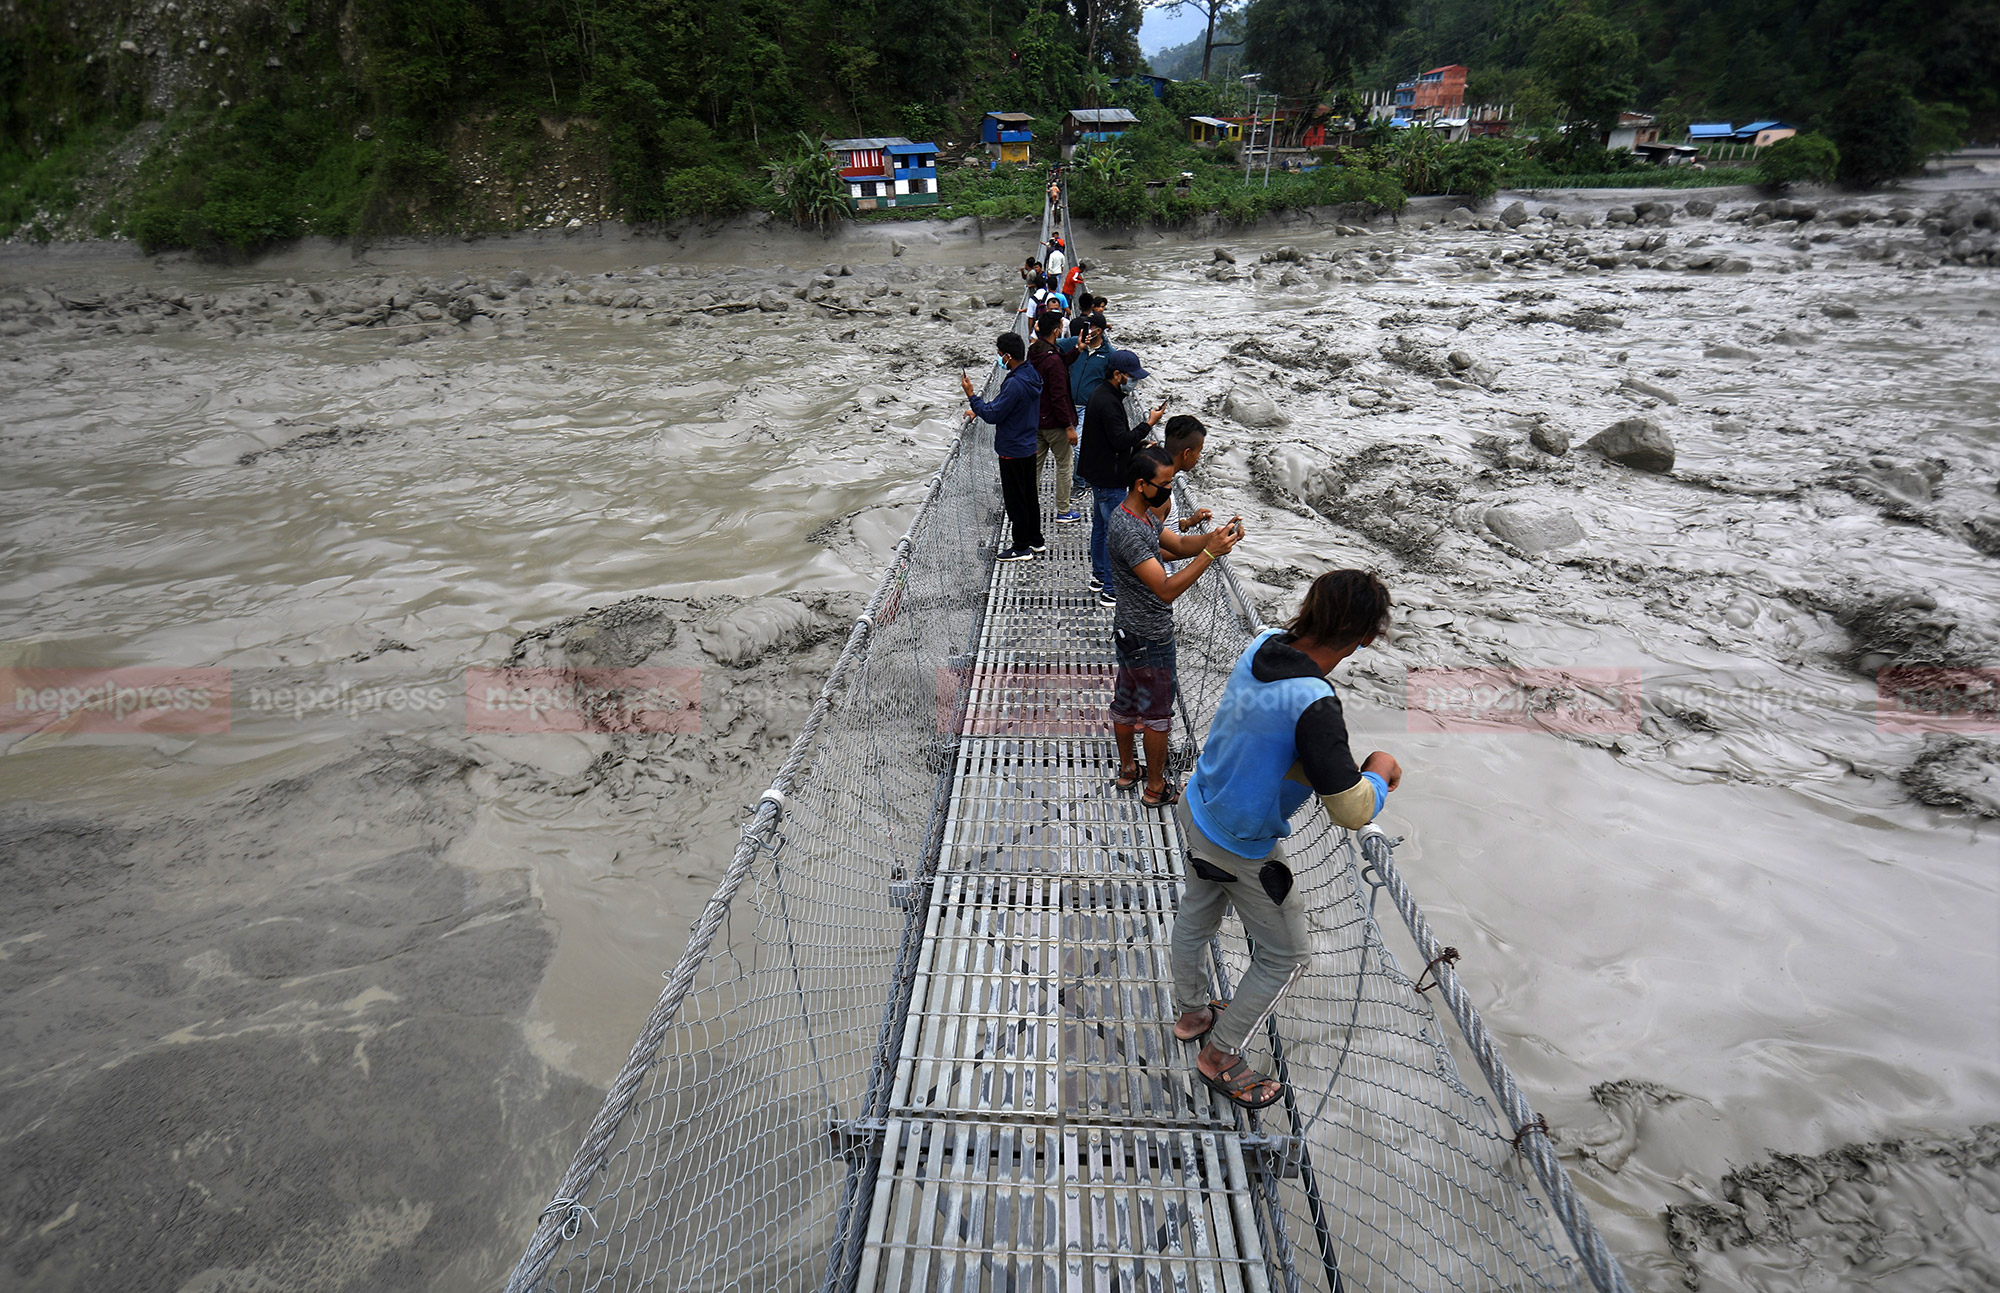 15 killed, 25 missing and 11 injured in floods and landslides in 4 days